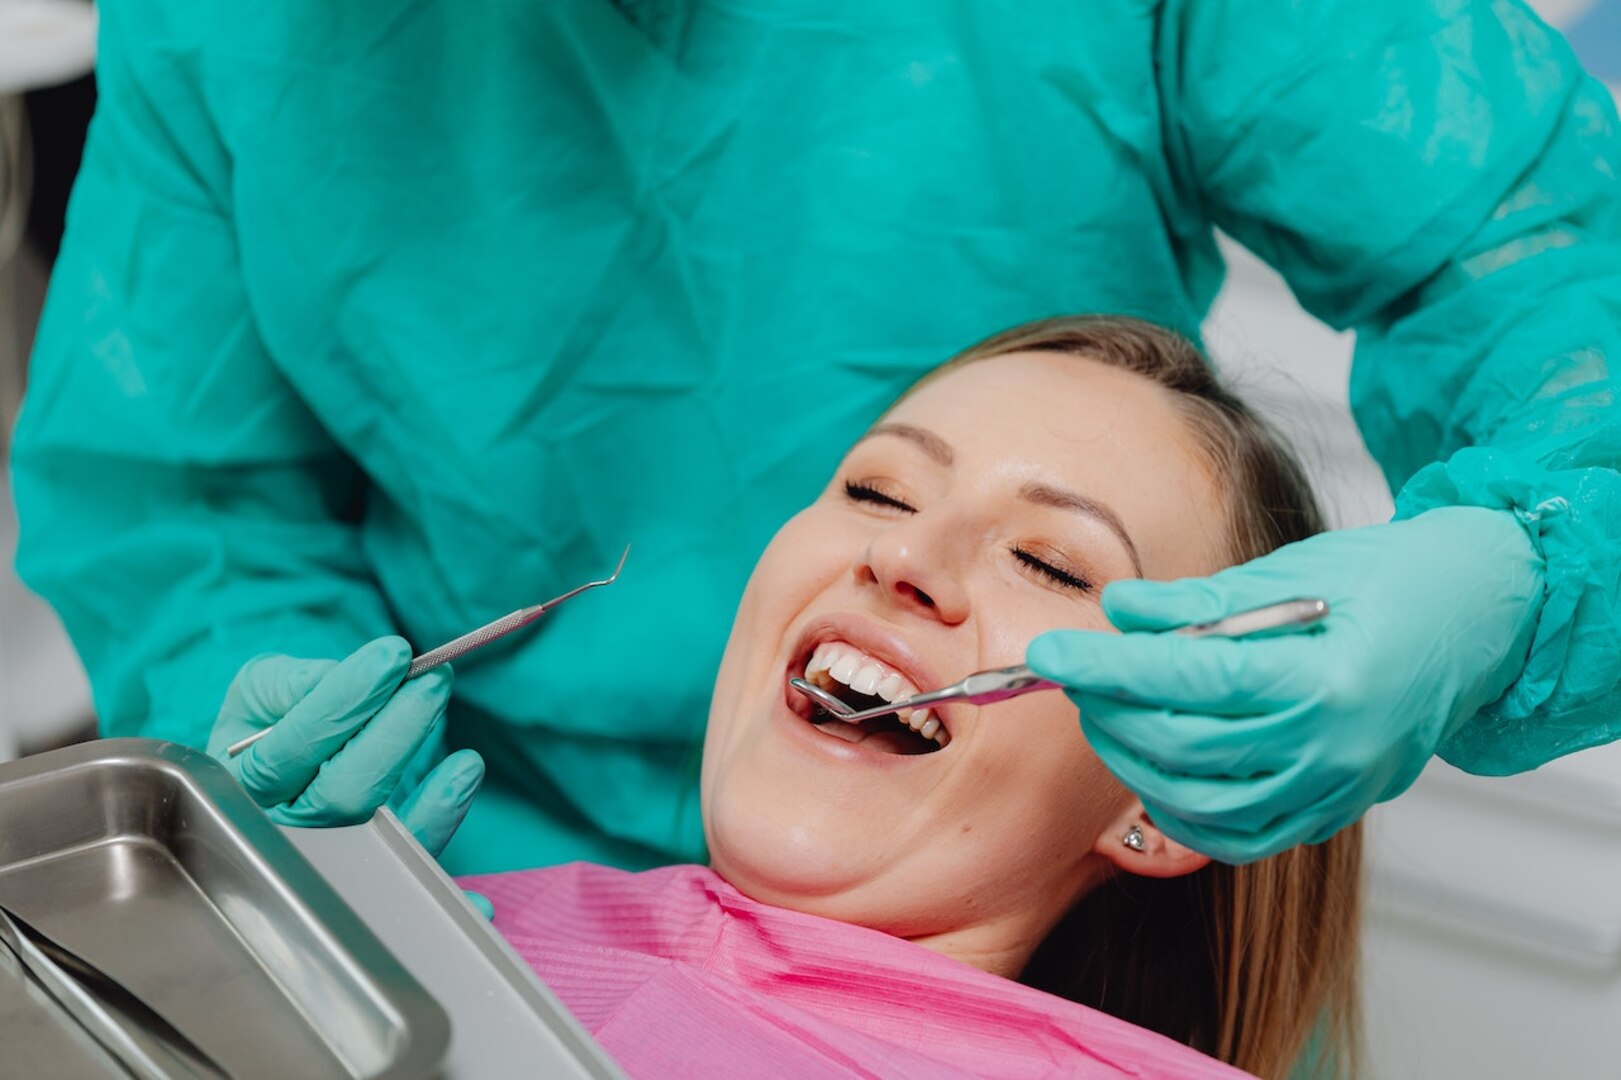 A dentist checks a woman's mouth